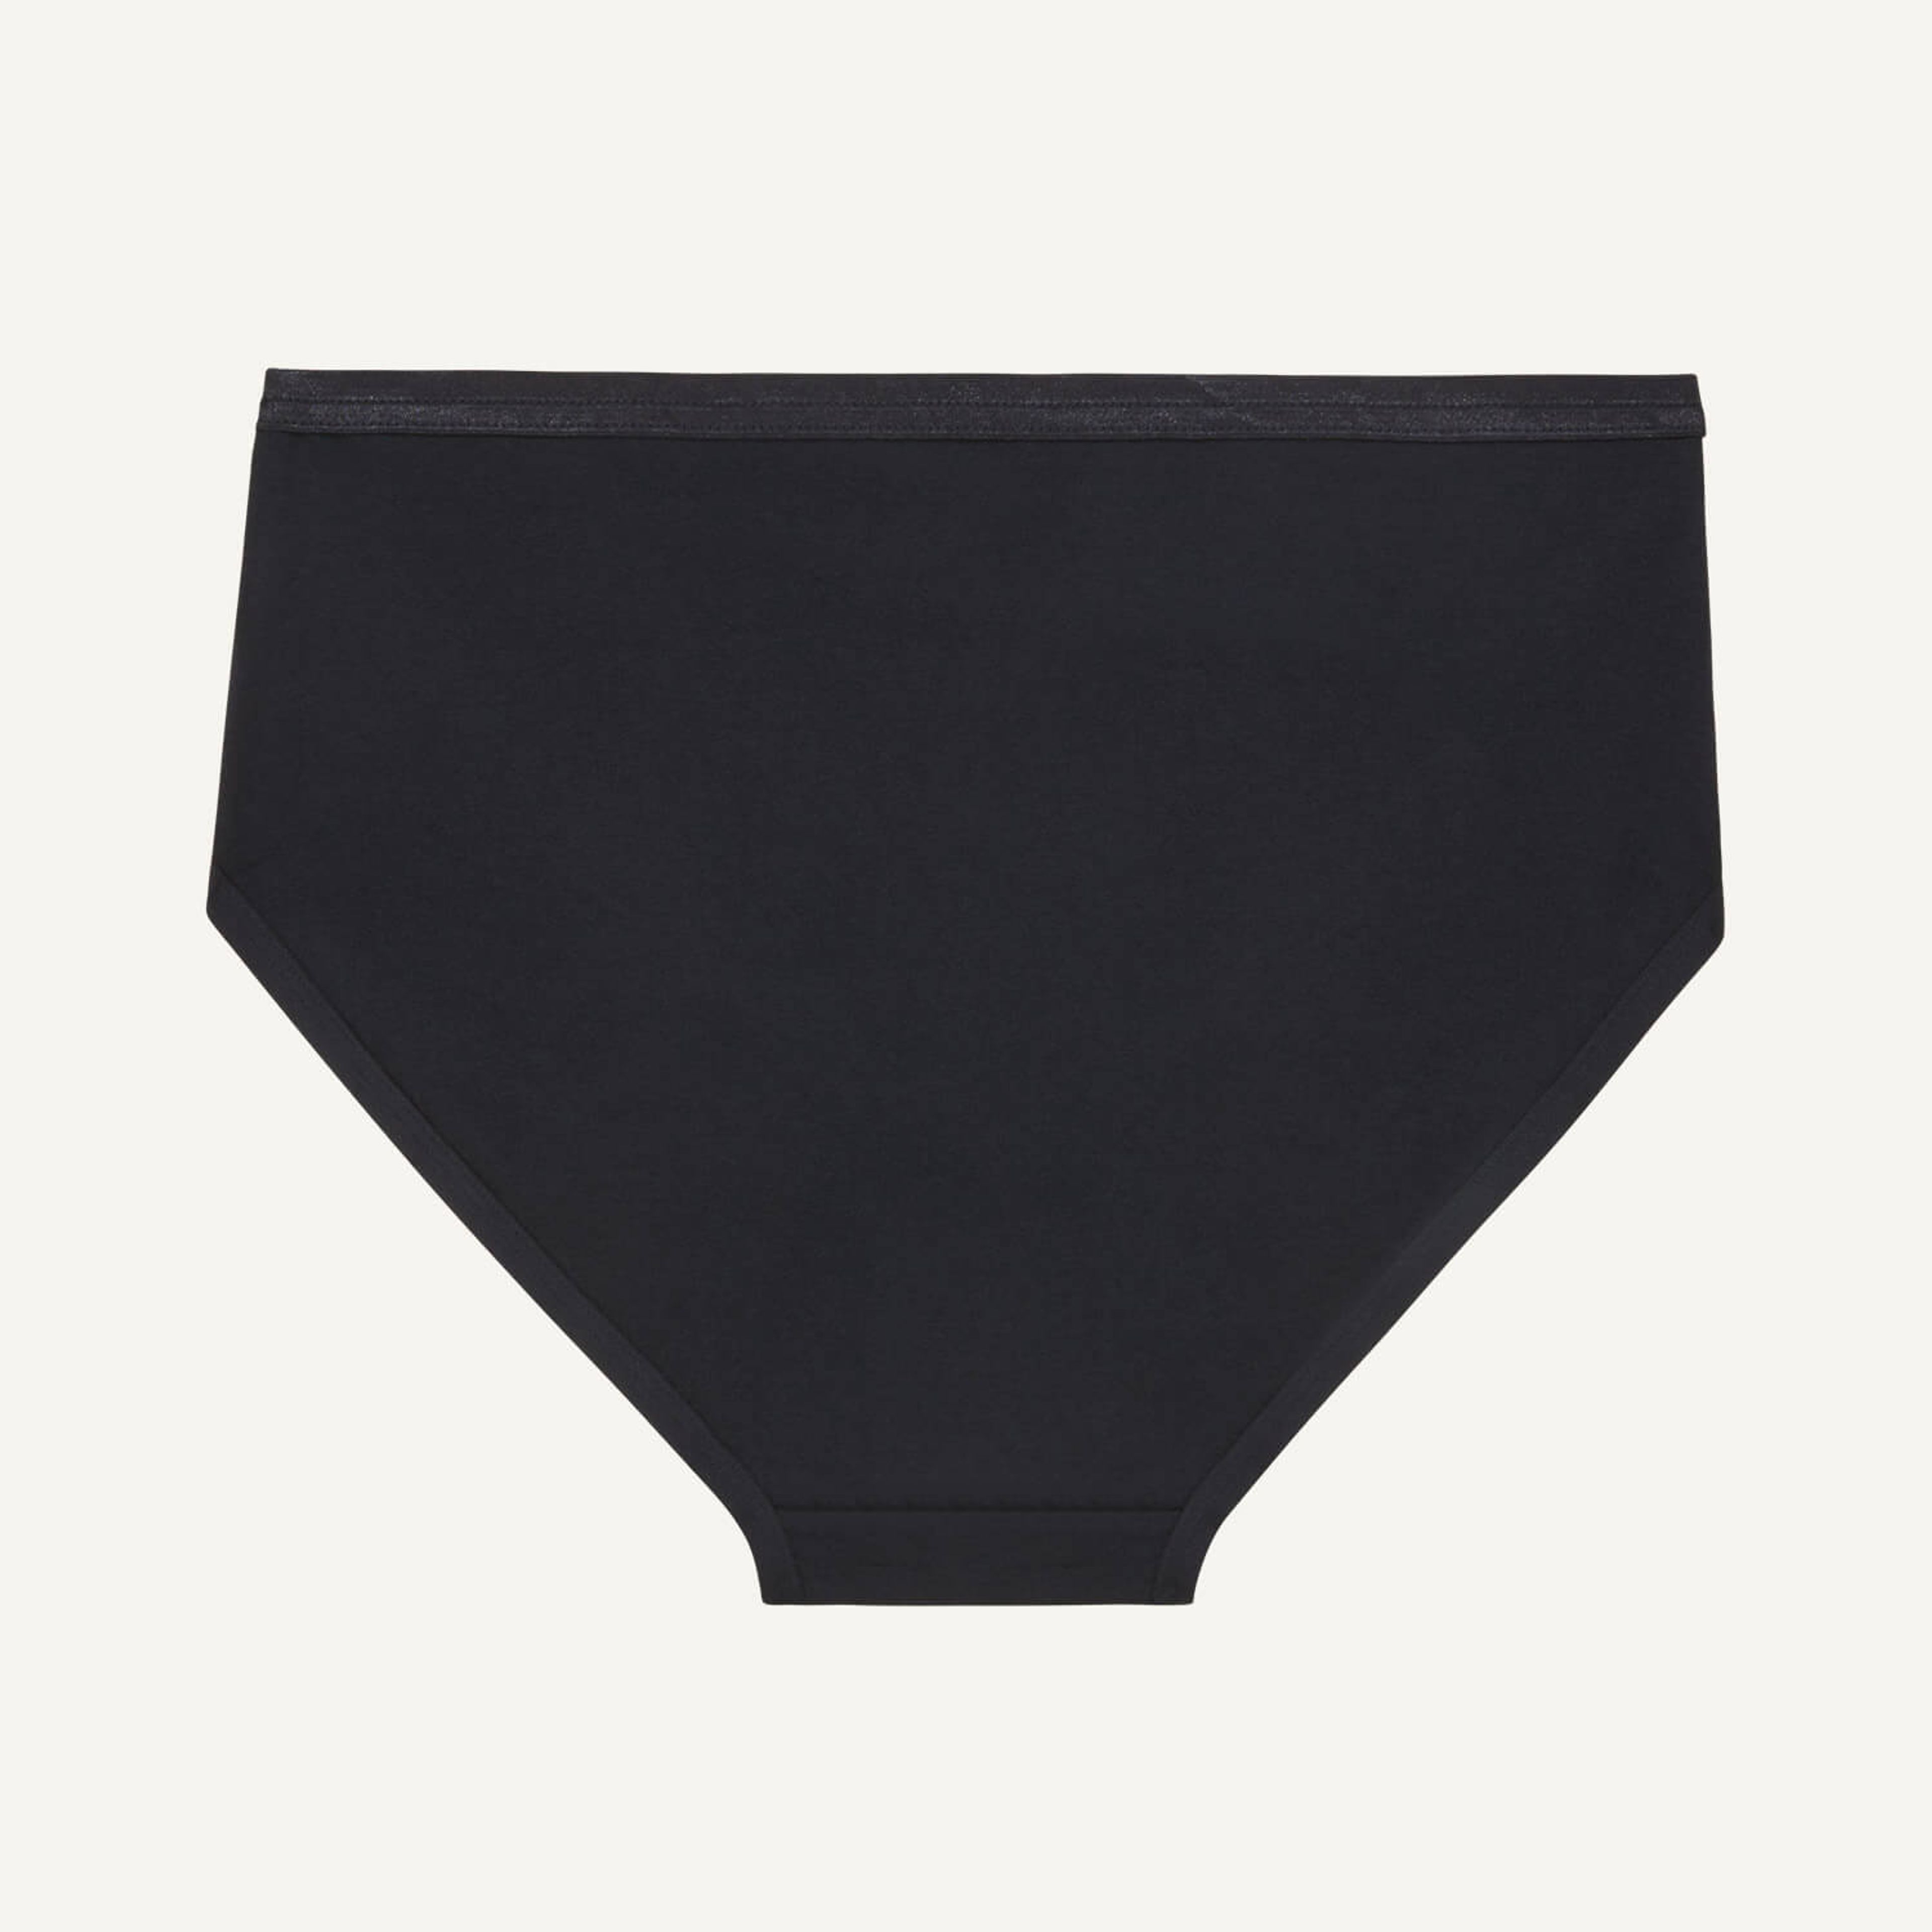 CARBON BASICS Women's Cotton Trunks Underwear | Solid Boyshort Panties  Combo (Pack of 3)